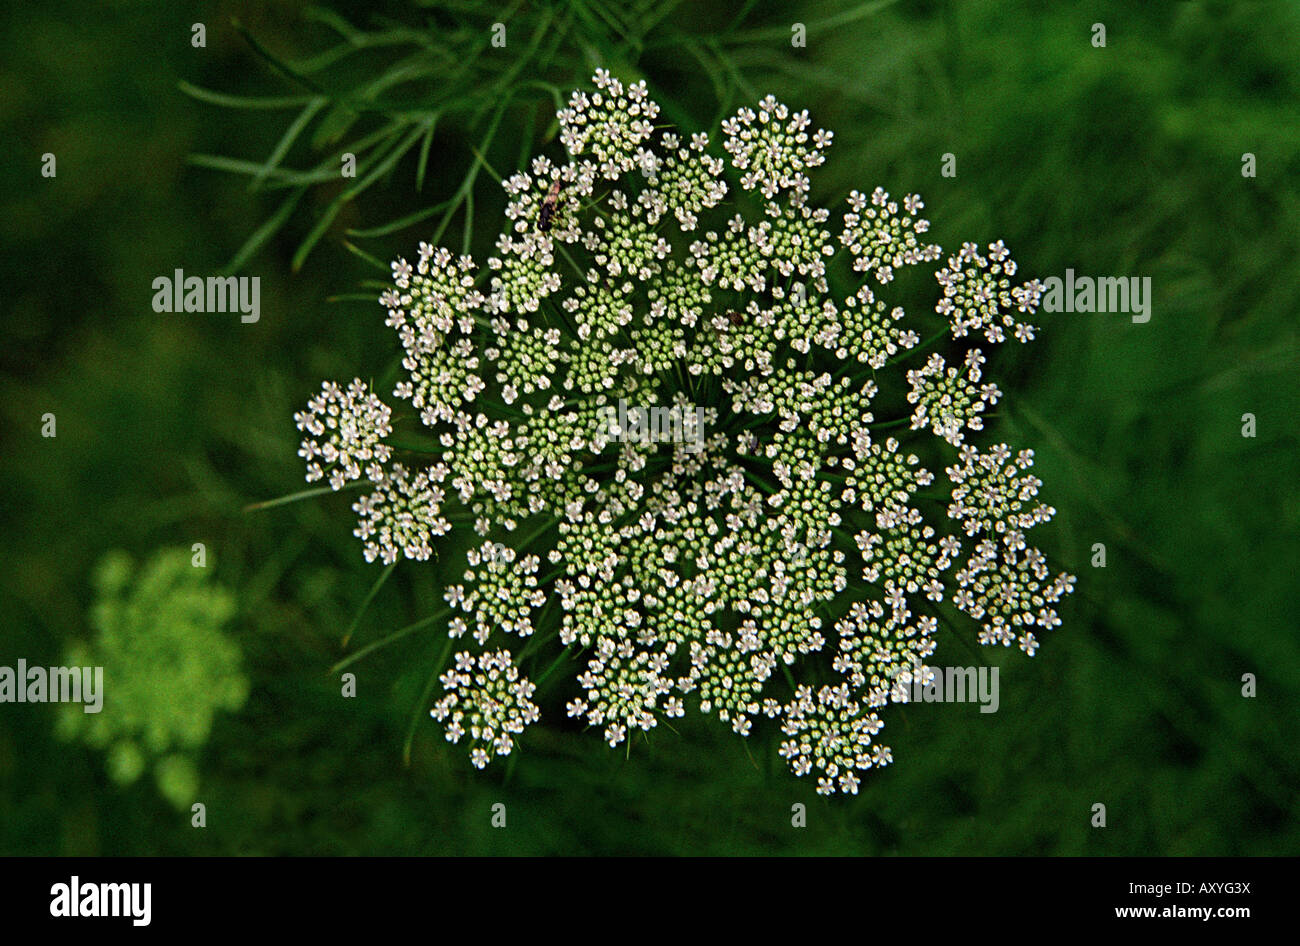 Cowbane, Northern Water Hemlock, Cicuta virosa, Umbelliferae/Apiaceae (carrot family) Stock Photo